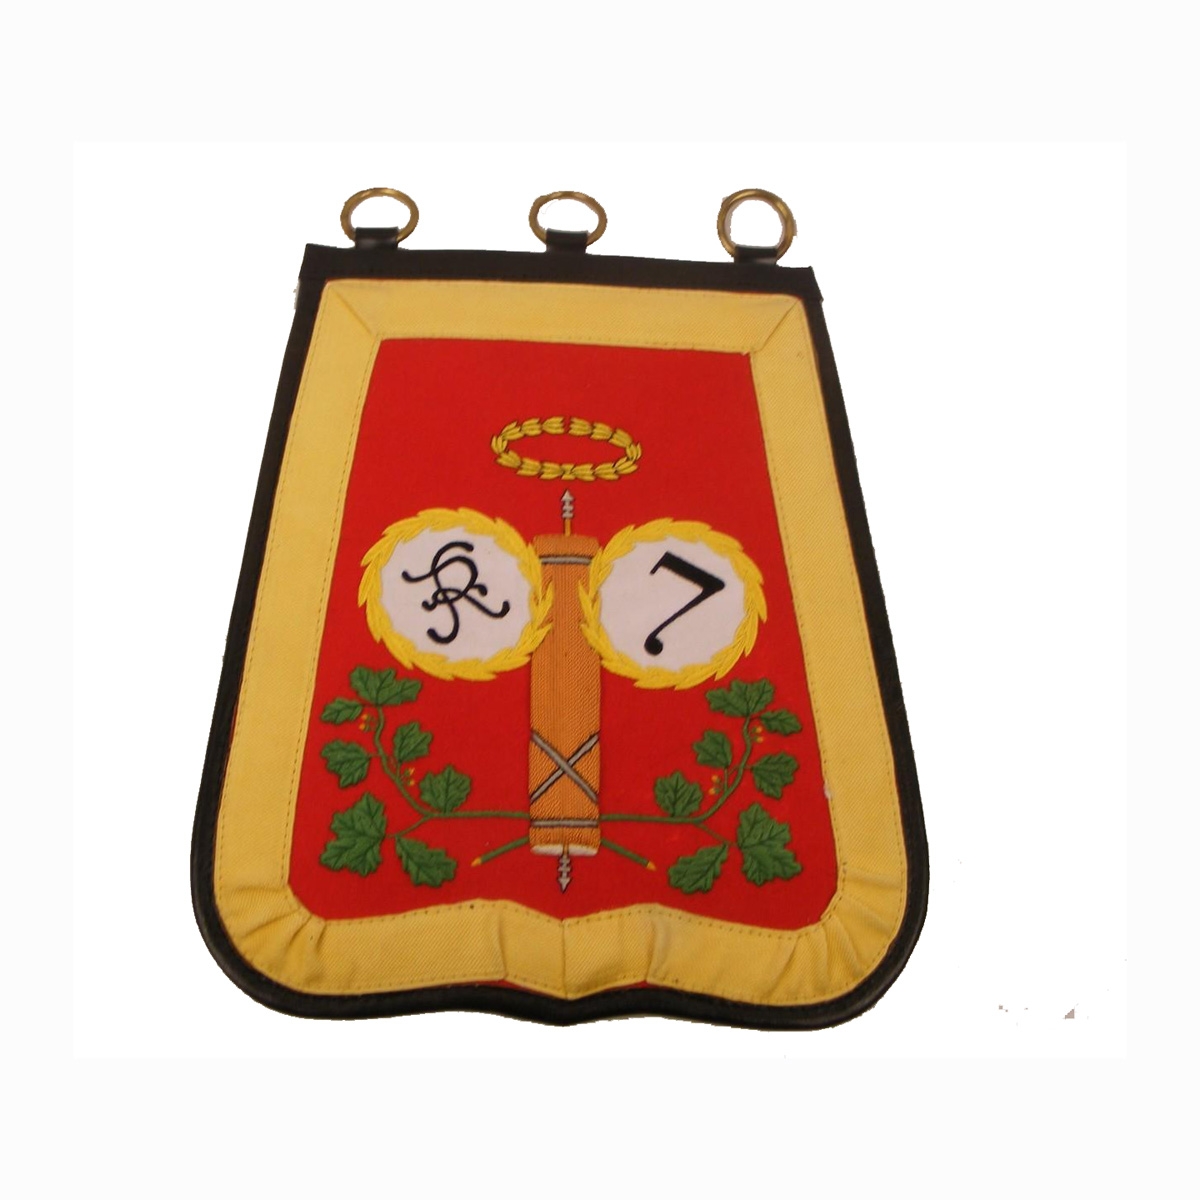 Troop 7 th hussar, revolution, sabretache flag wholesale prize Badges supplier, Embroidery 